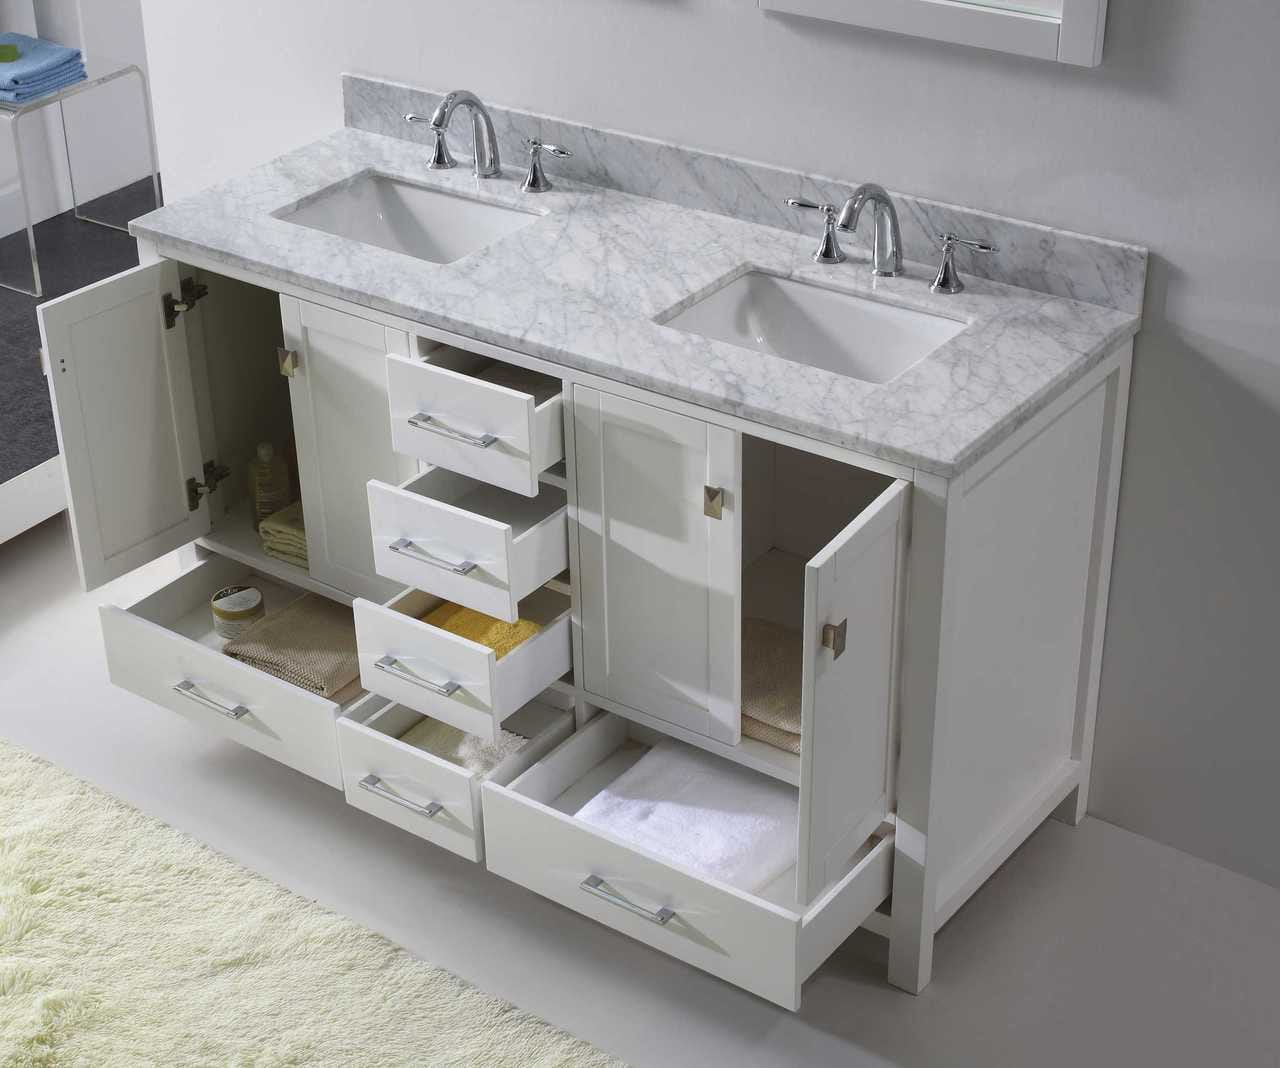 Virtu USA Caroline Avenue 60 Double Bathroom Vanity Set in White w/ Italian Carrara White Marble Counter-Top | Square Basin